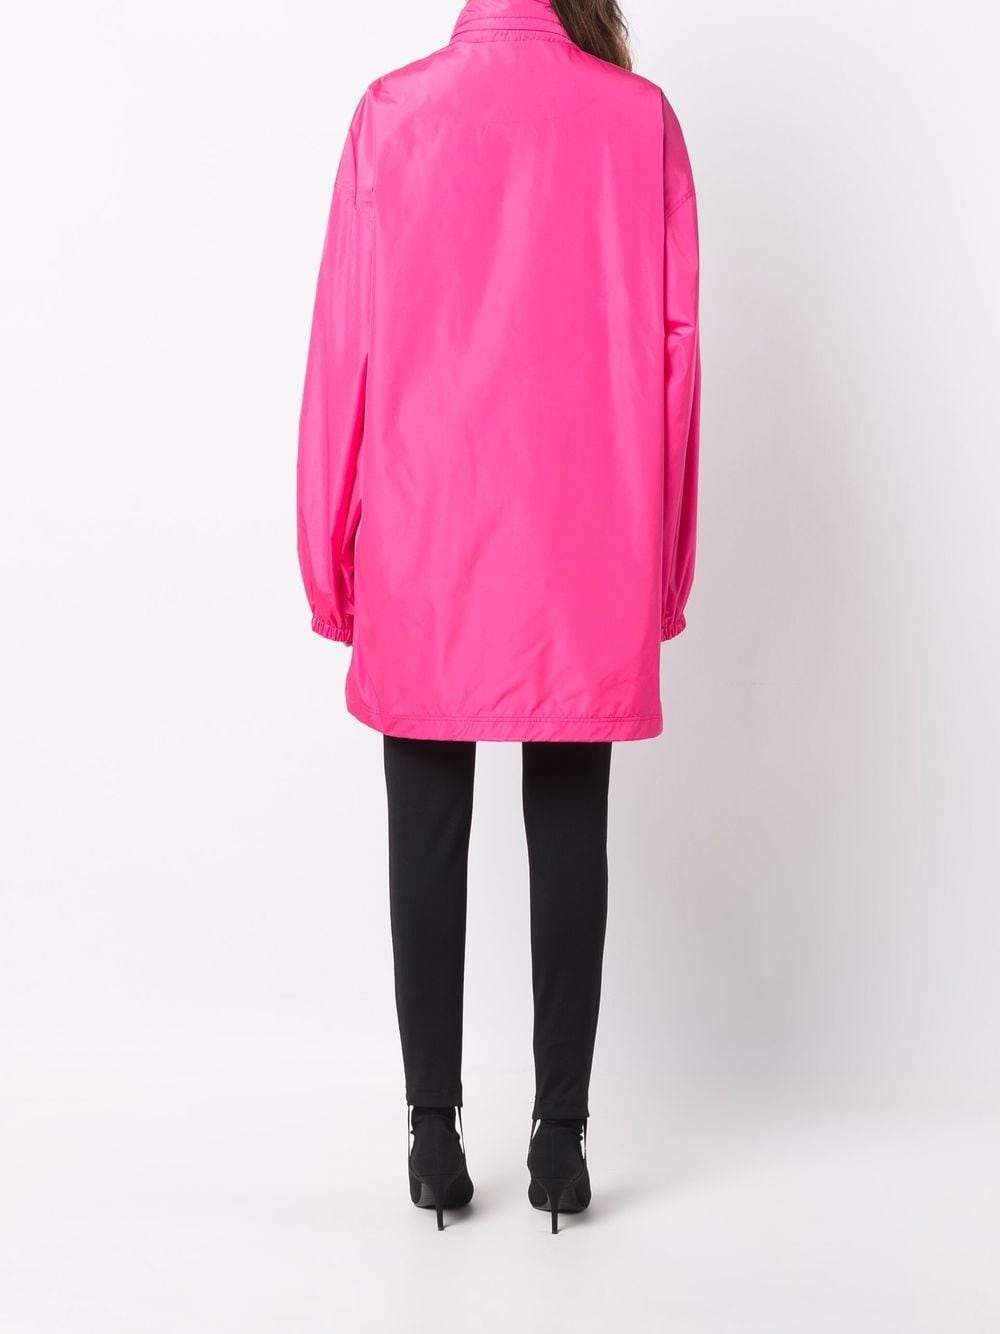 LV raincoat  Fashion, Fashion design clothes, Coats for women